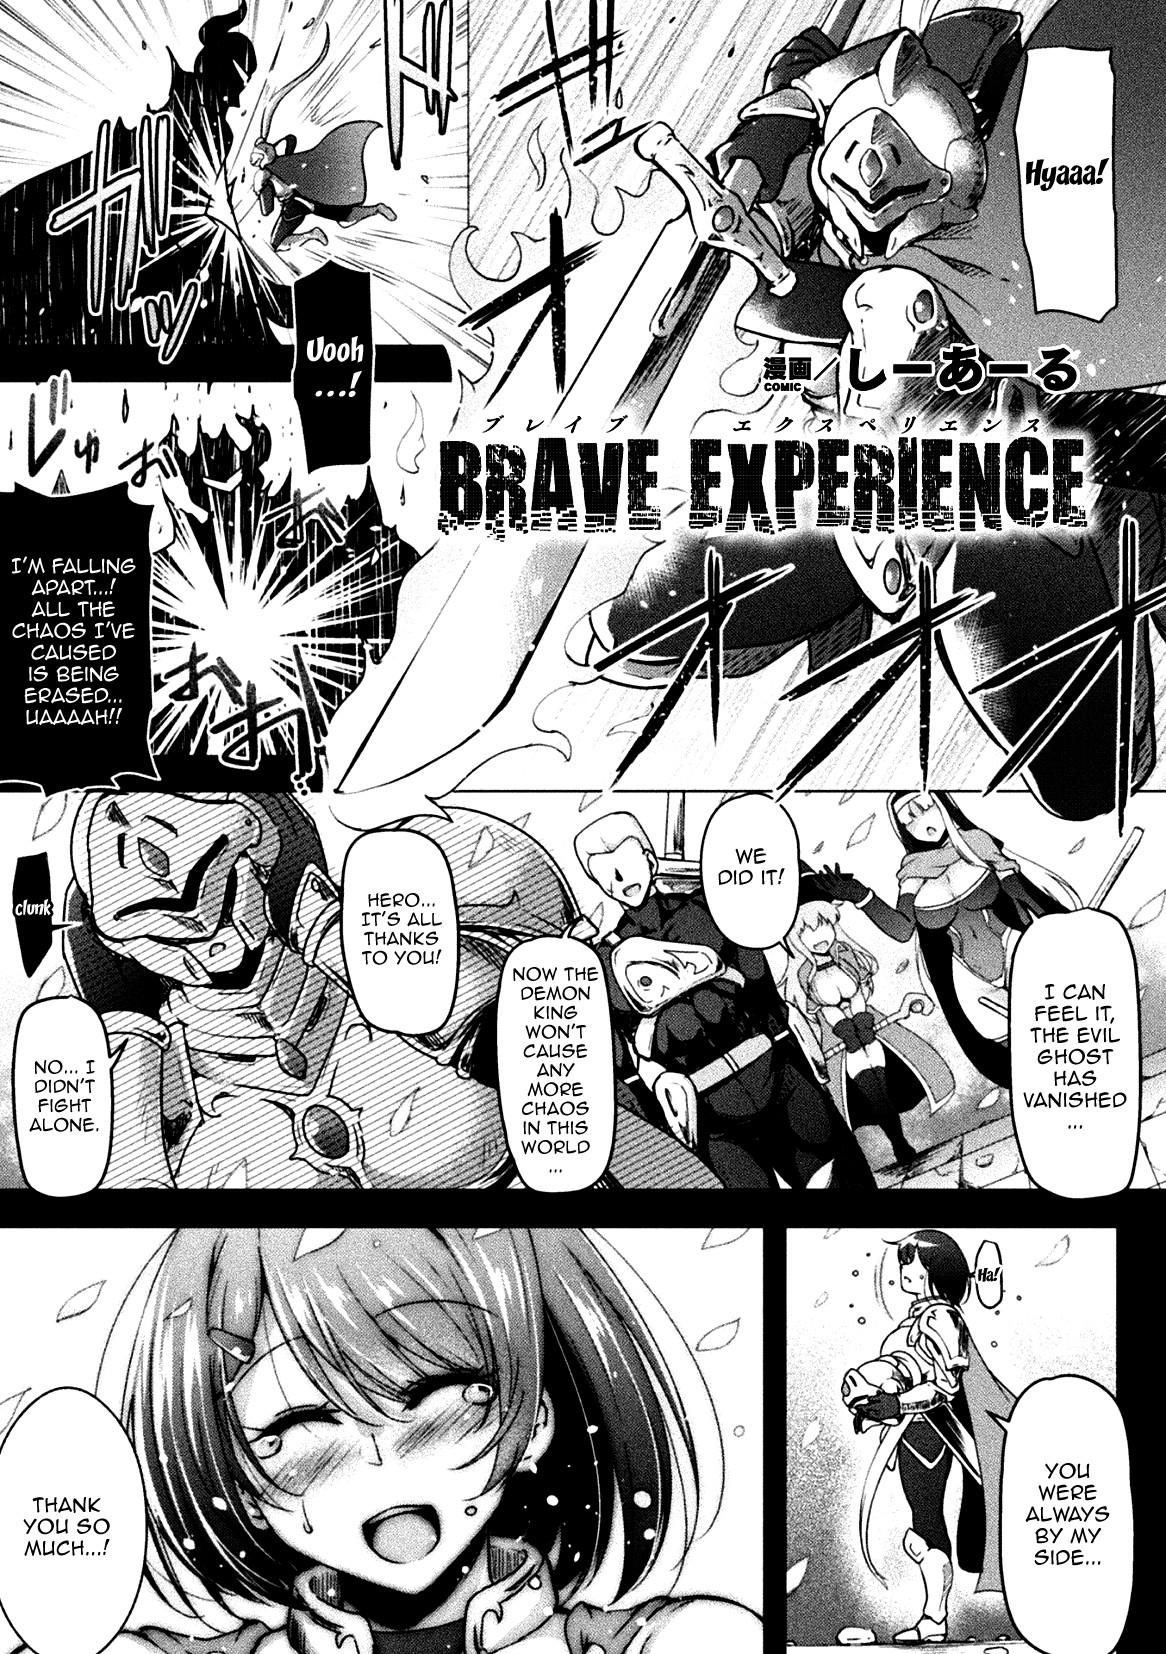 BRAVE EXPERIENCE 0